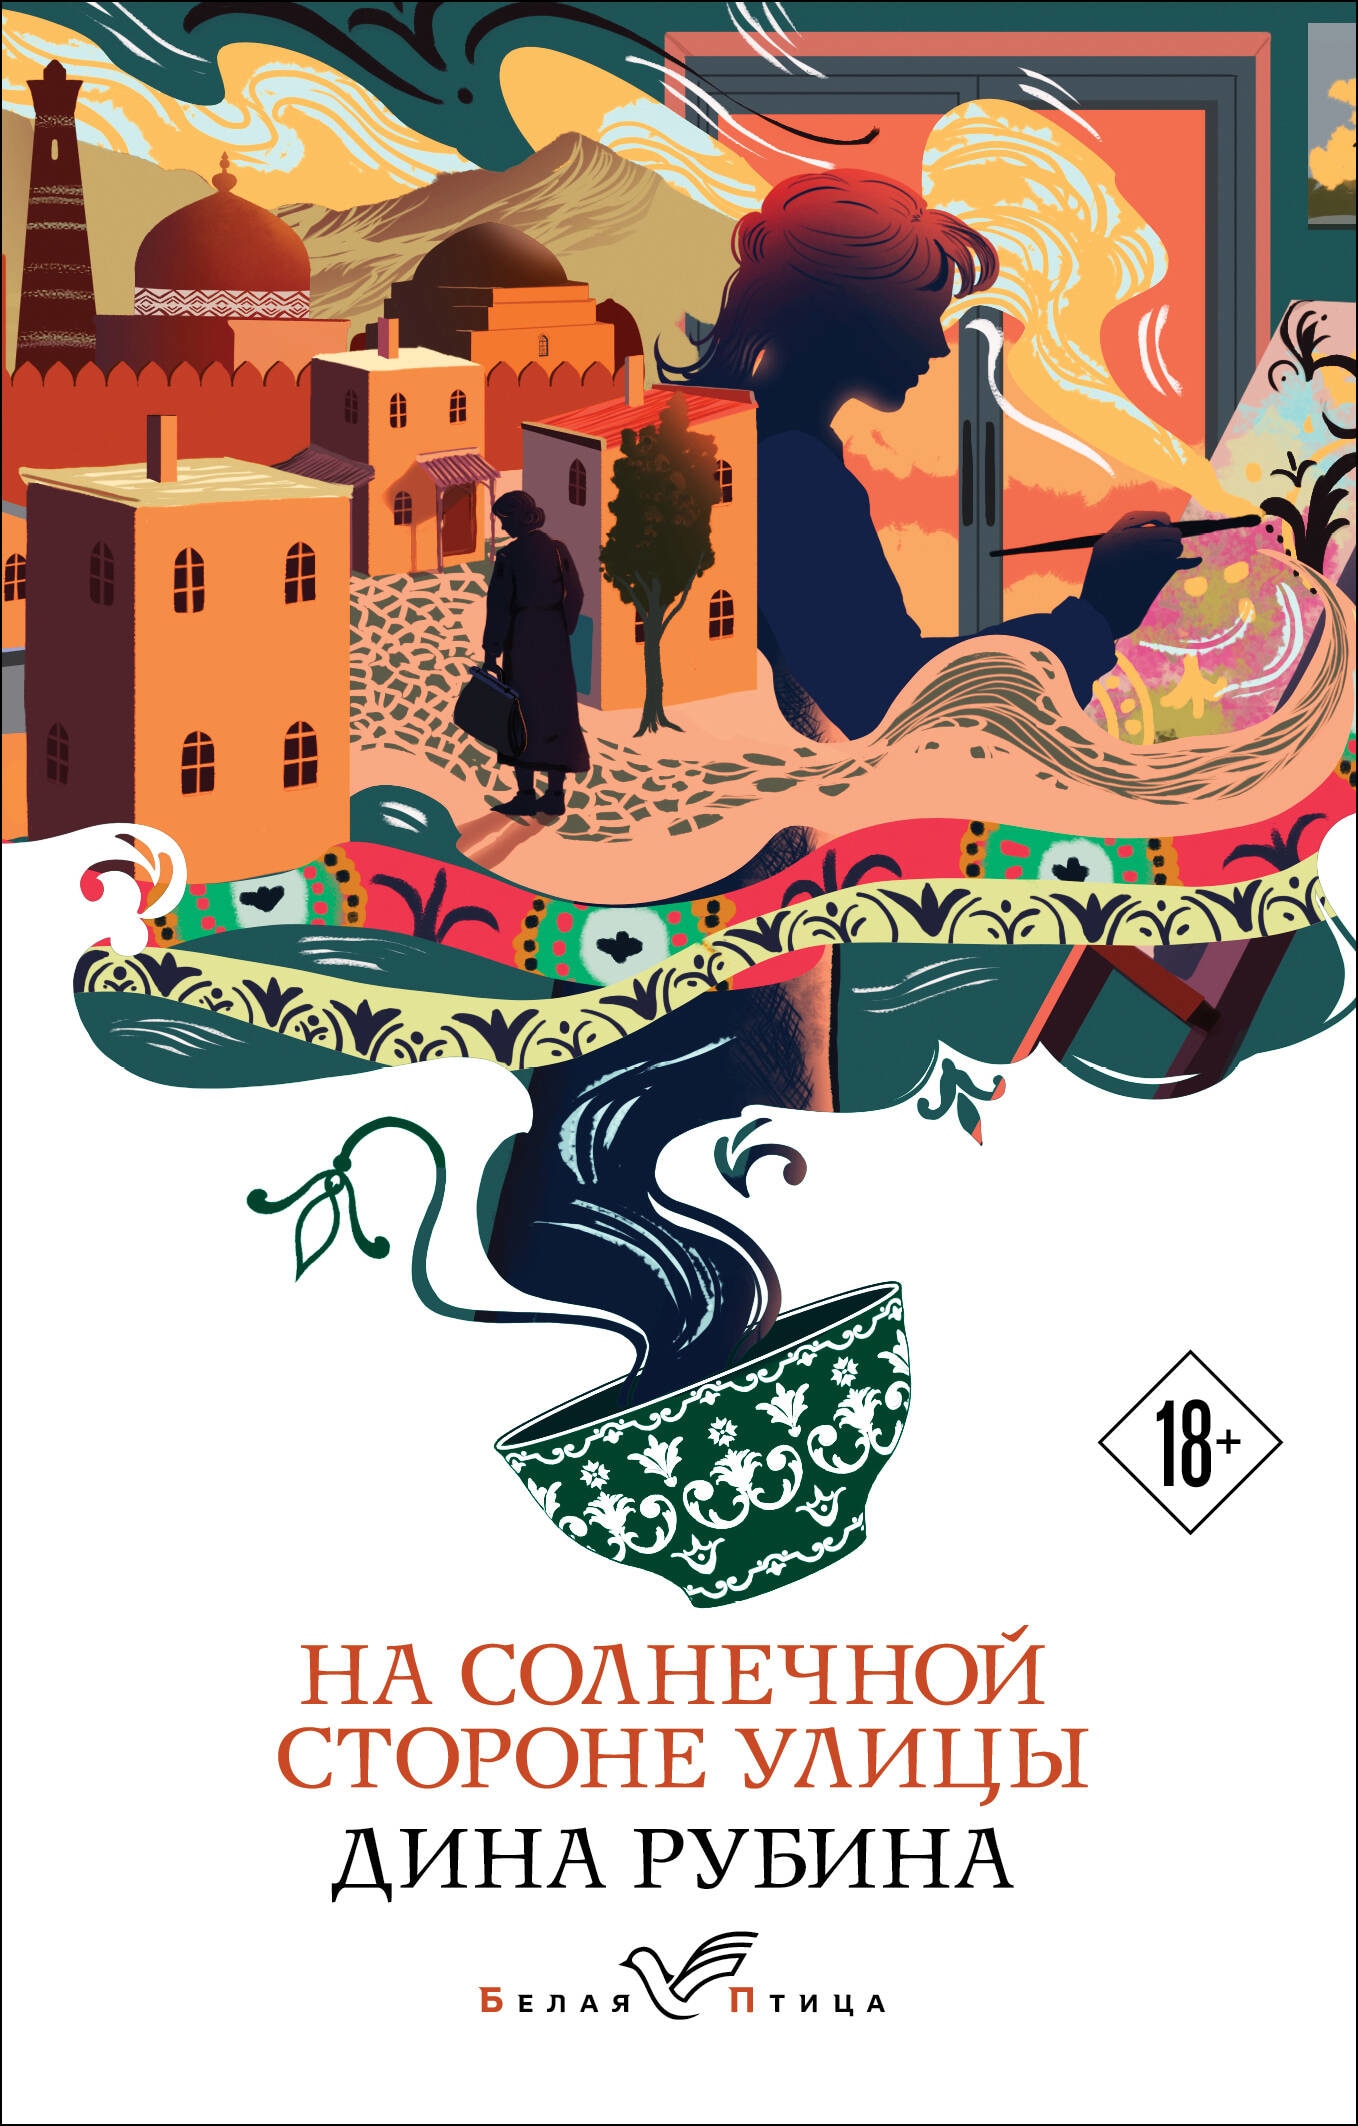 Book “На солнечной стороне улицы” by Дина Рубина — 2023